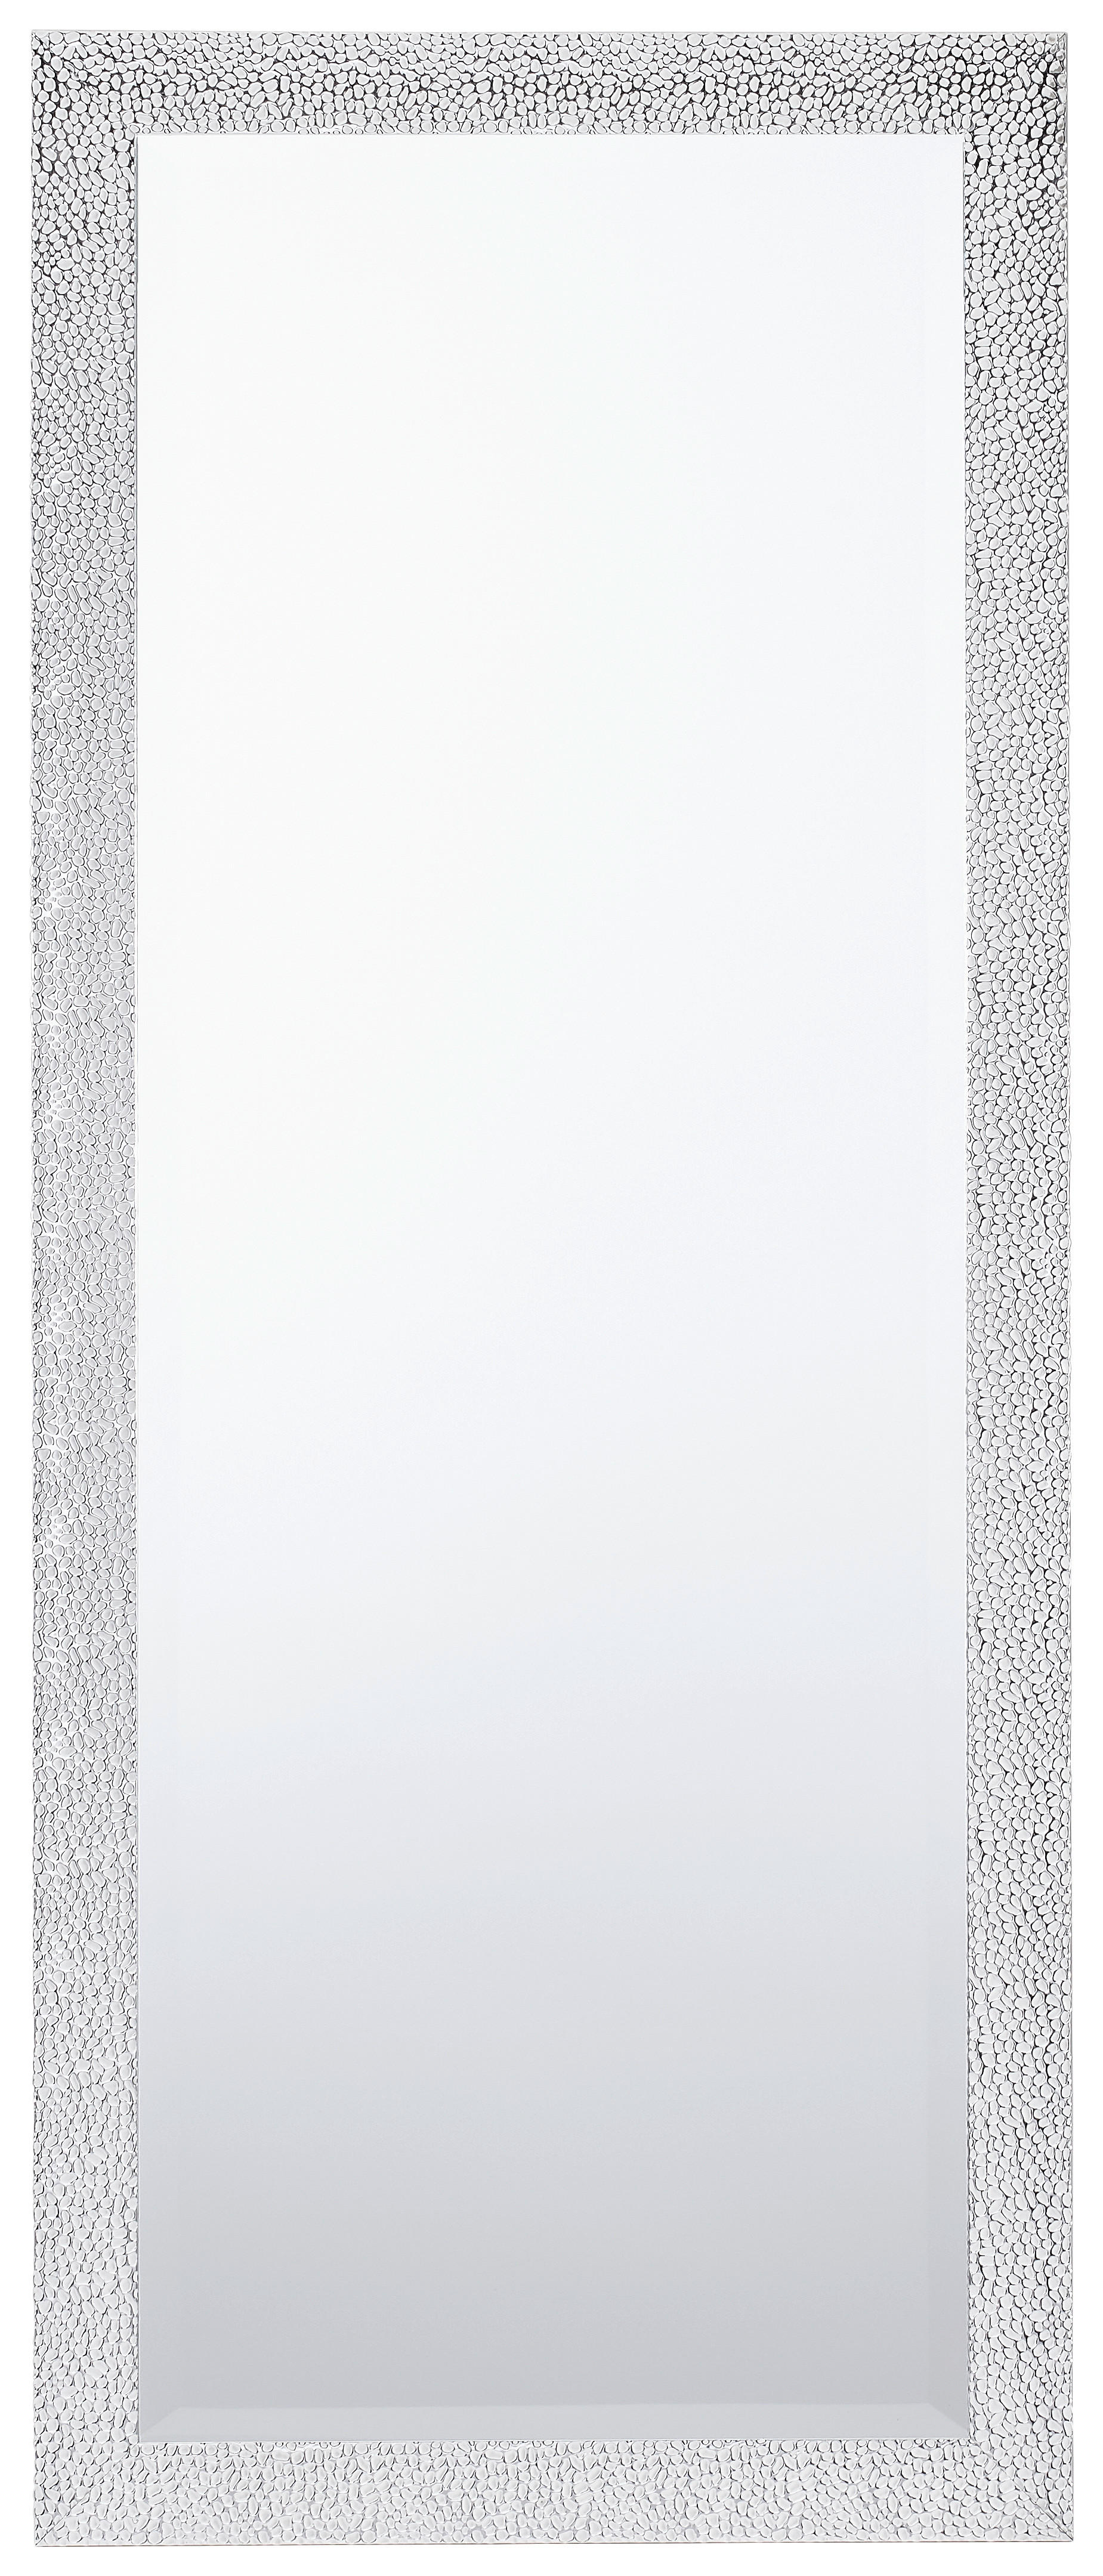 VÄGGSPEGEL 70/170/2 cm    - silver, Lifestyle, metall/glas (70/170/2cm) - Carryhome